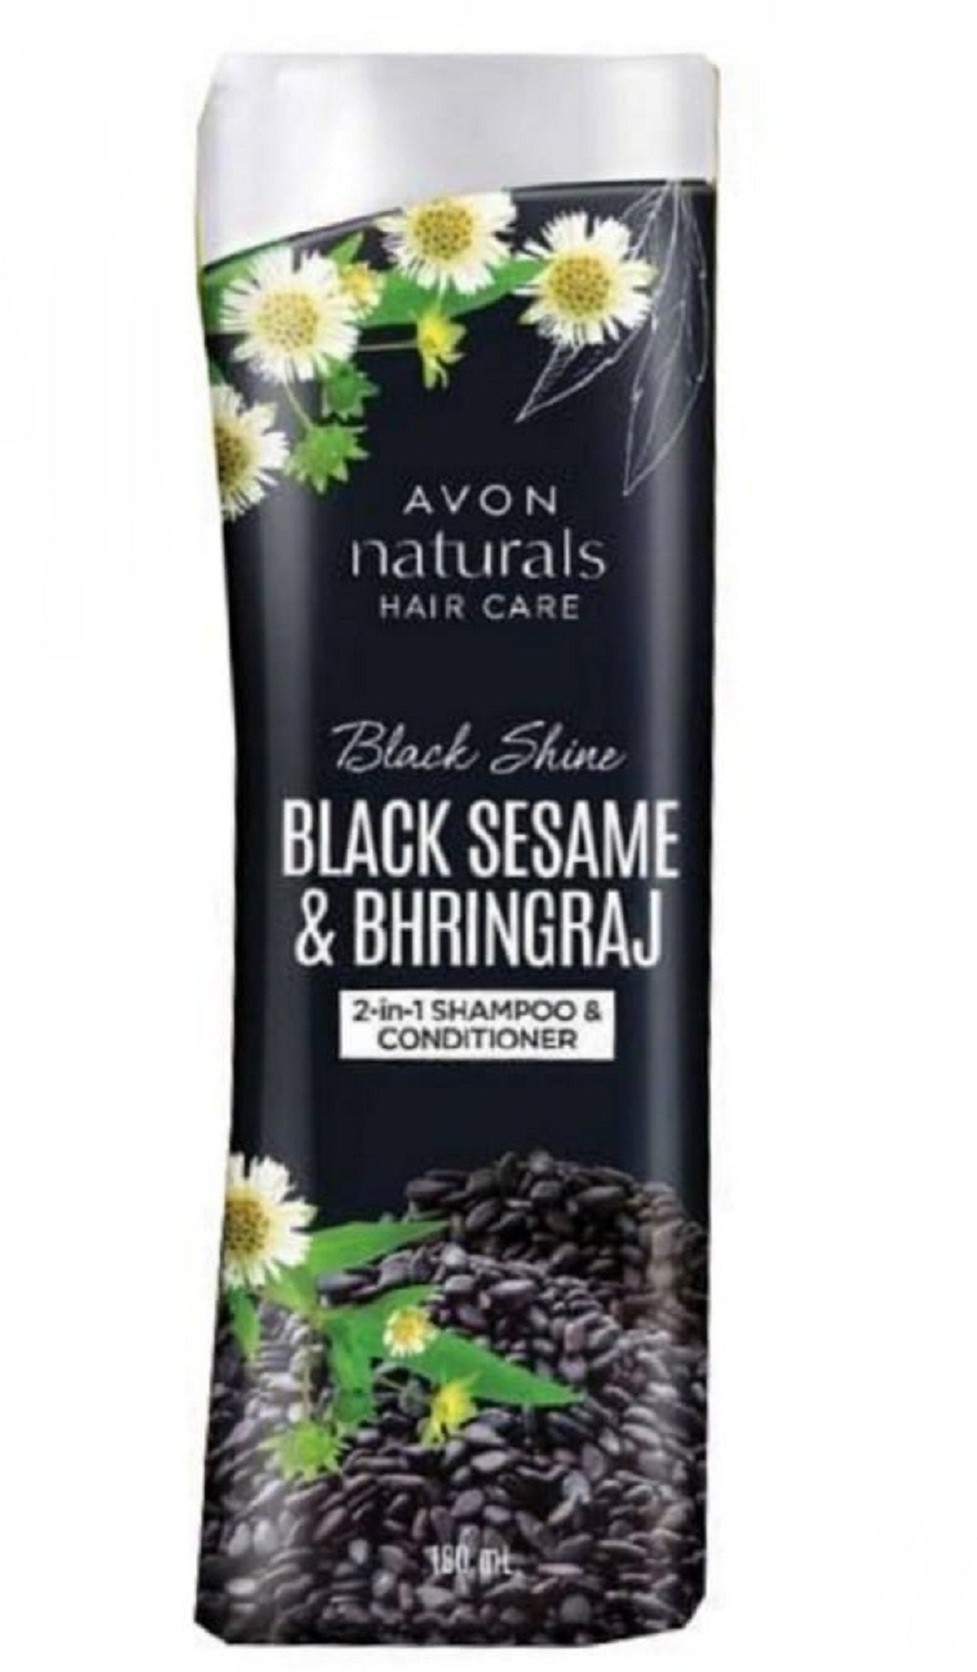 Avon Natural Black Shine Bhringraj 2 in 1 Shampoo & Conditioner